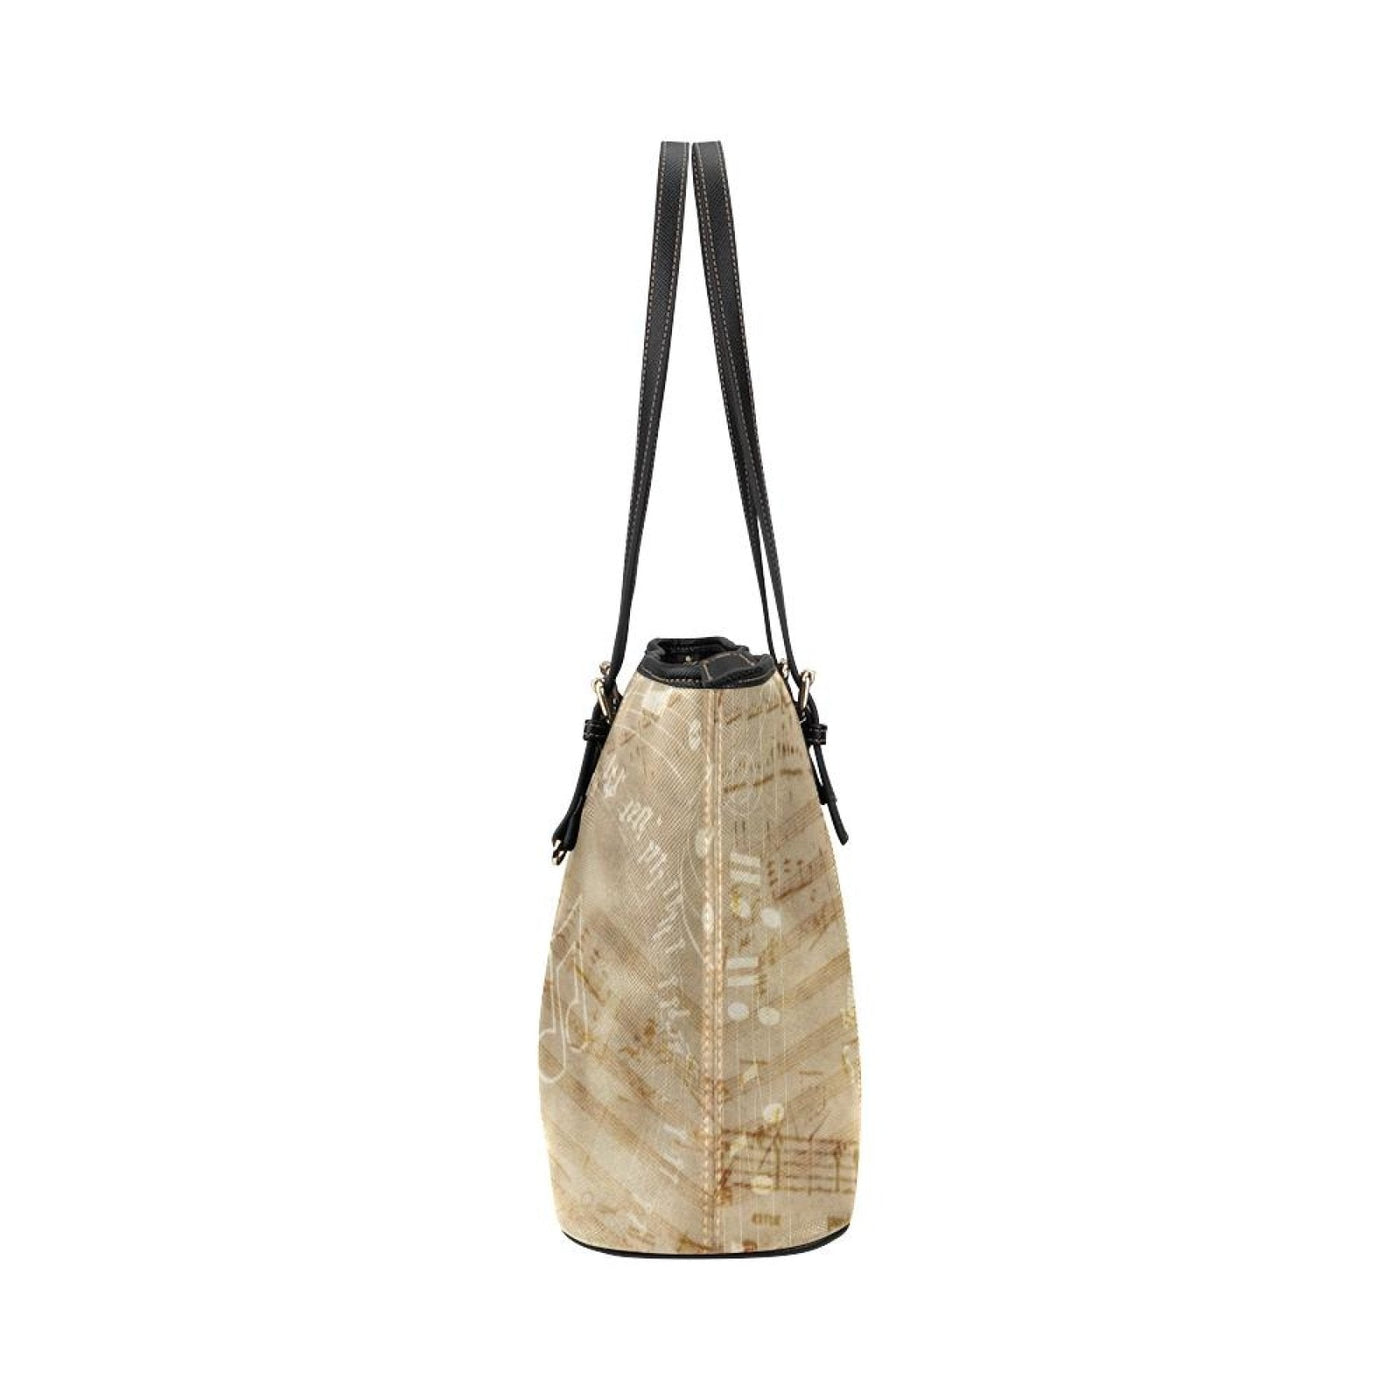 Large Leather Tote Shoulder Bag - Tote Bagstan Musical Notes Design Tote Bag